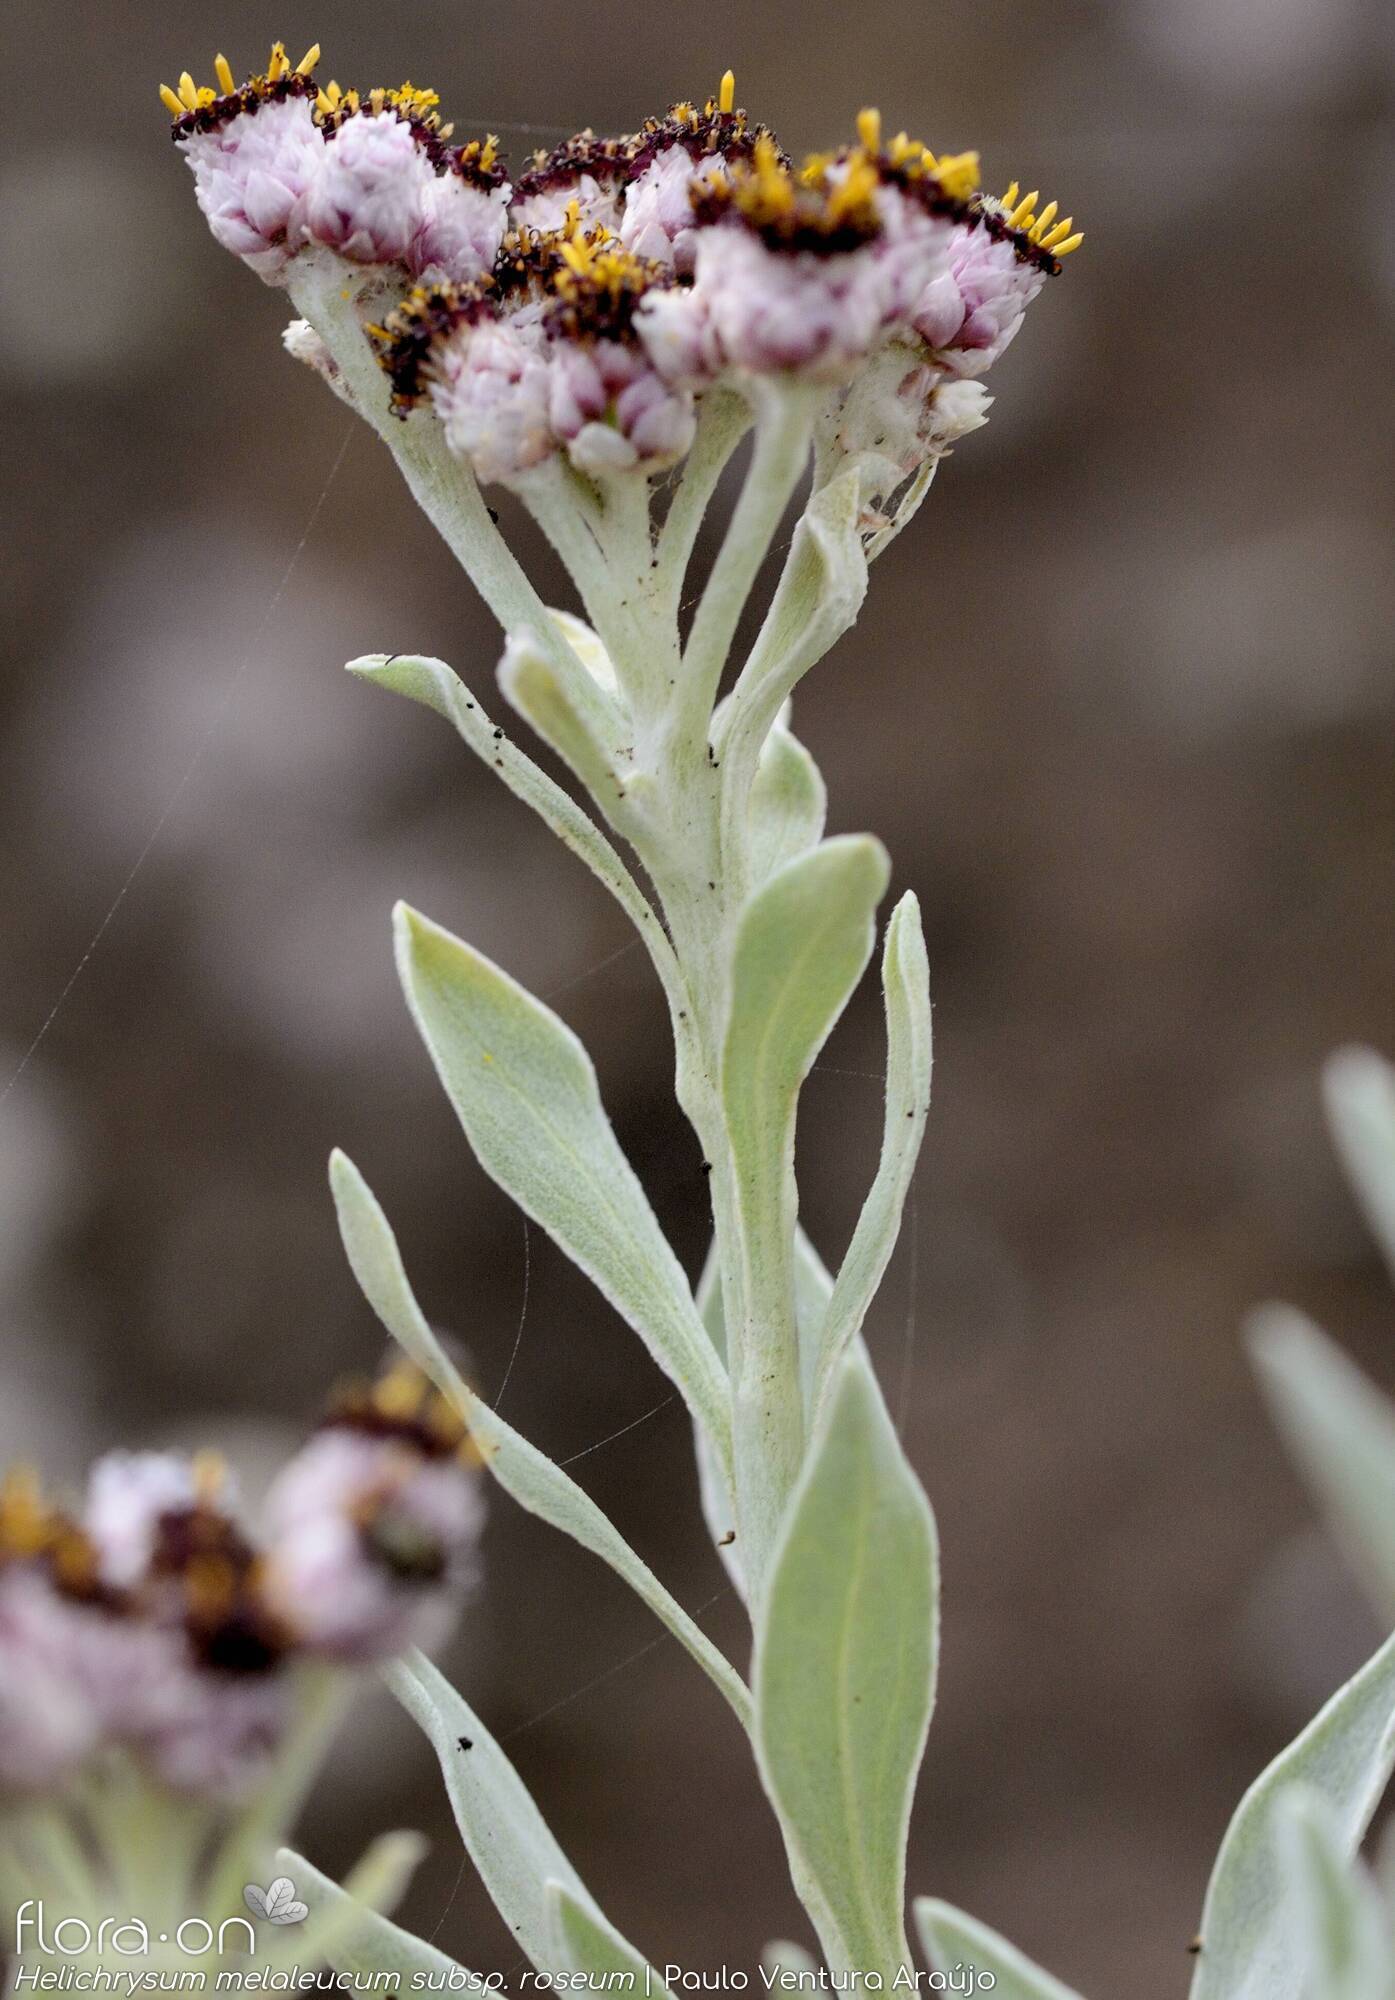 Helichrysum melaleucum - Flor (geral) | Paulo Ventura Araújo; CC BY-NC 4.0